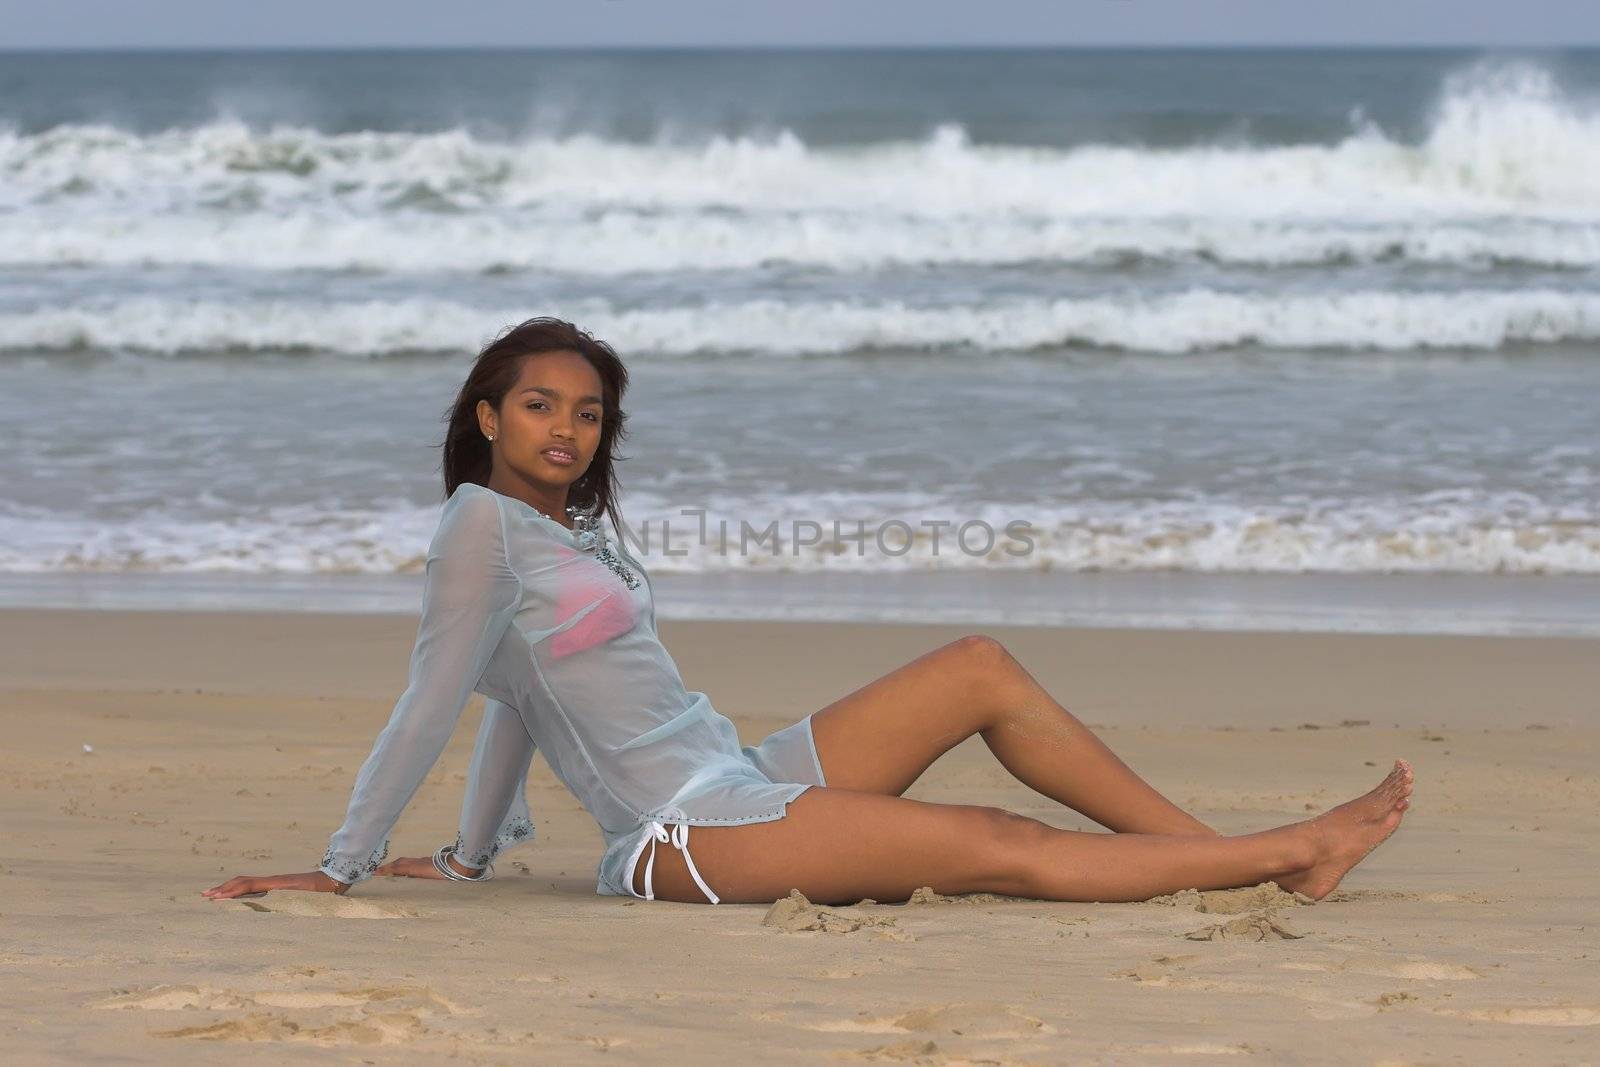 Ethnic bikini model posing at the beach